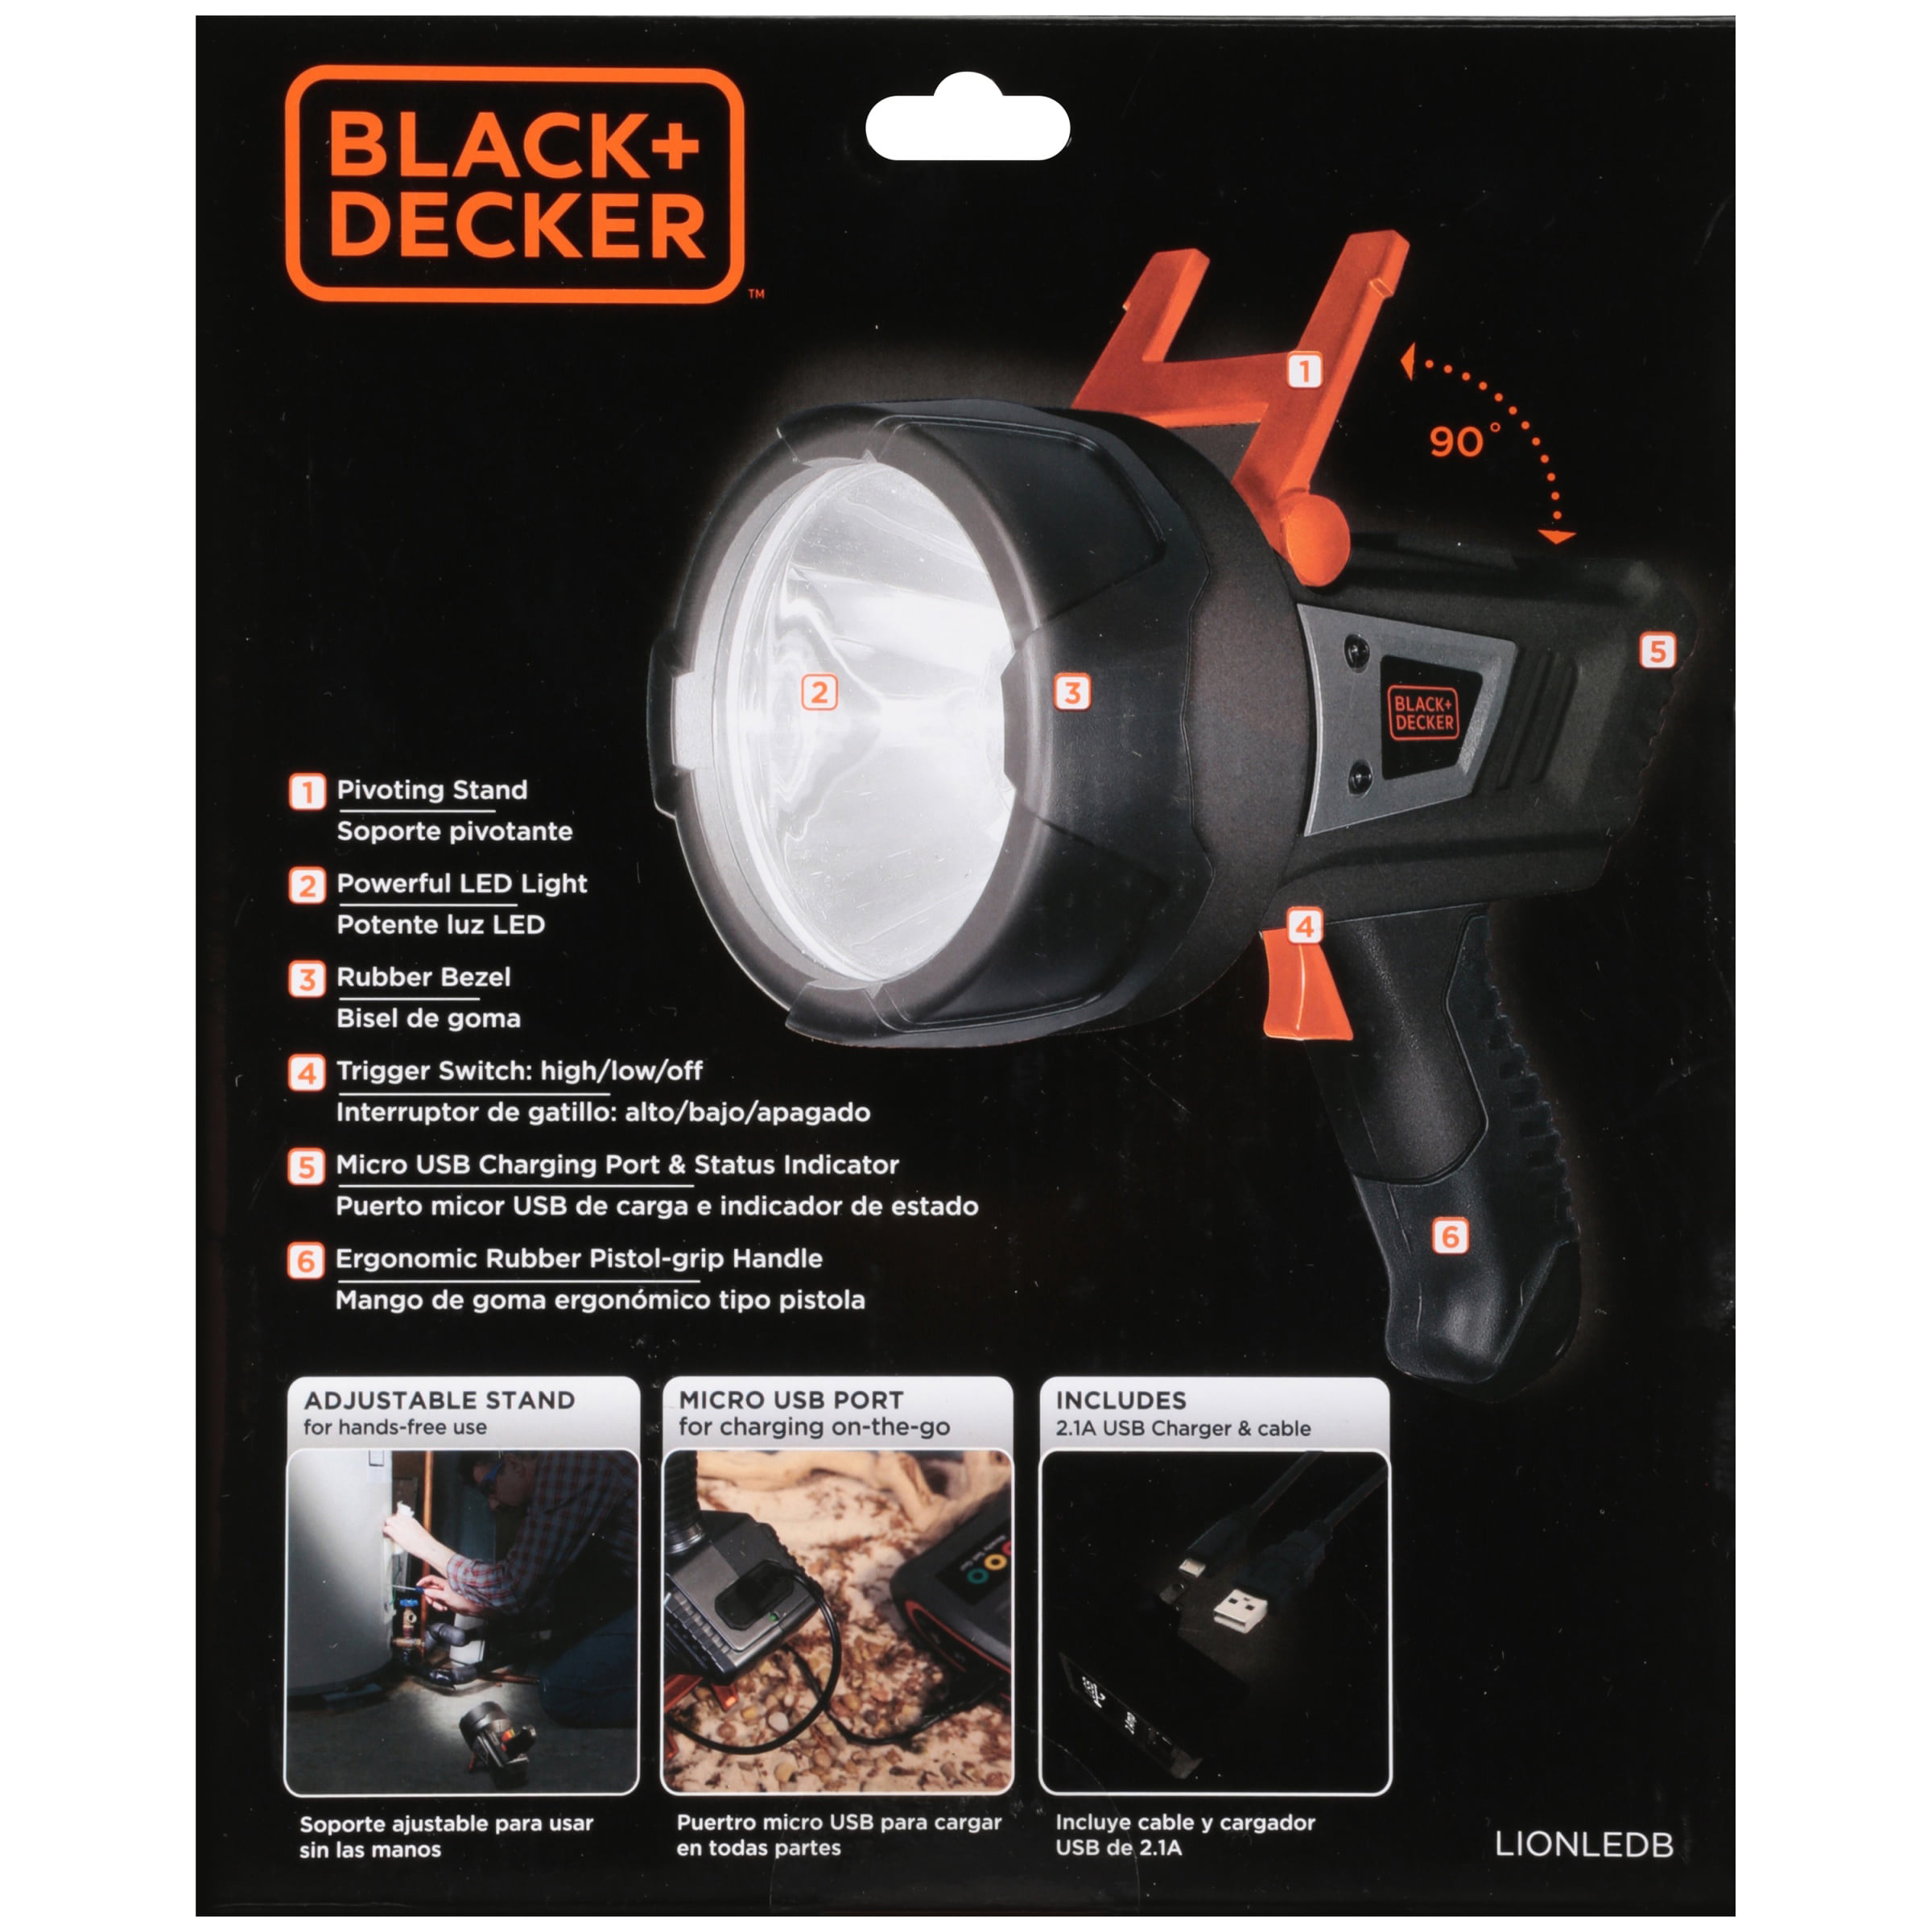 BLACK+DECKER SLV2B Rechargeable, Flashlight 750 Lumen Lithium Ion 10W LED  Spotlight Flashlight